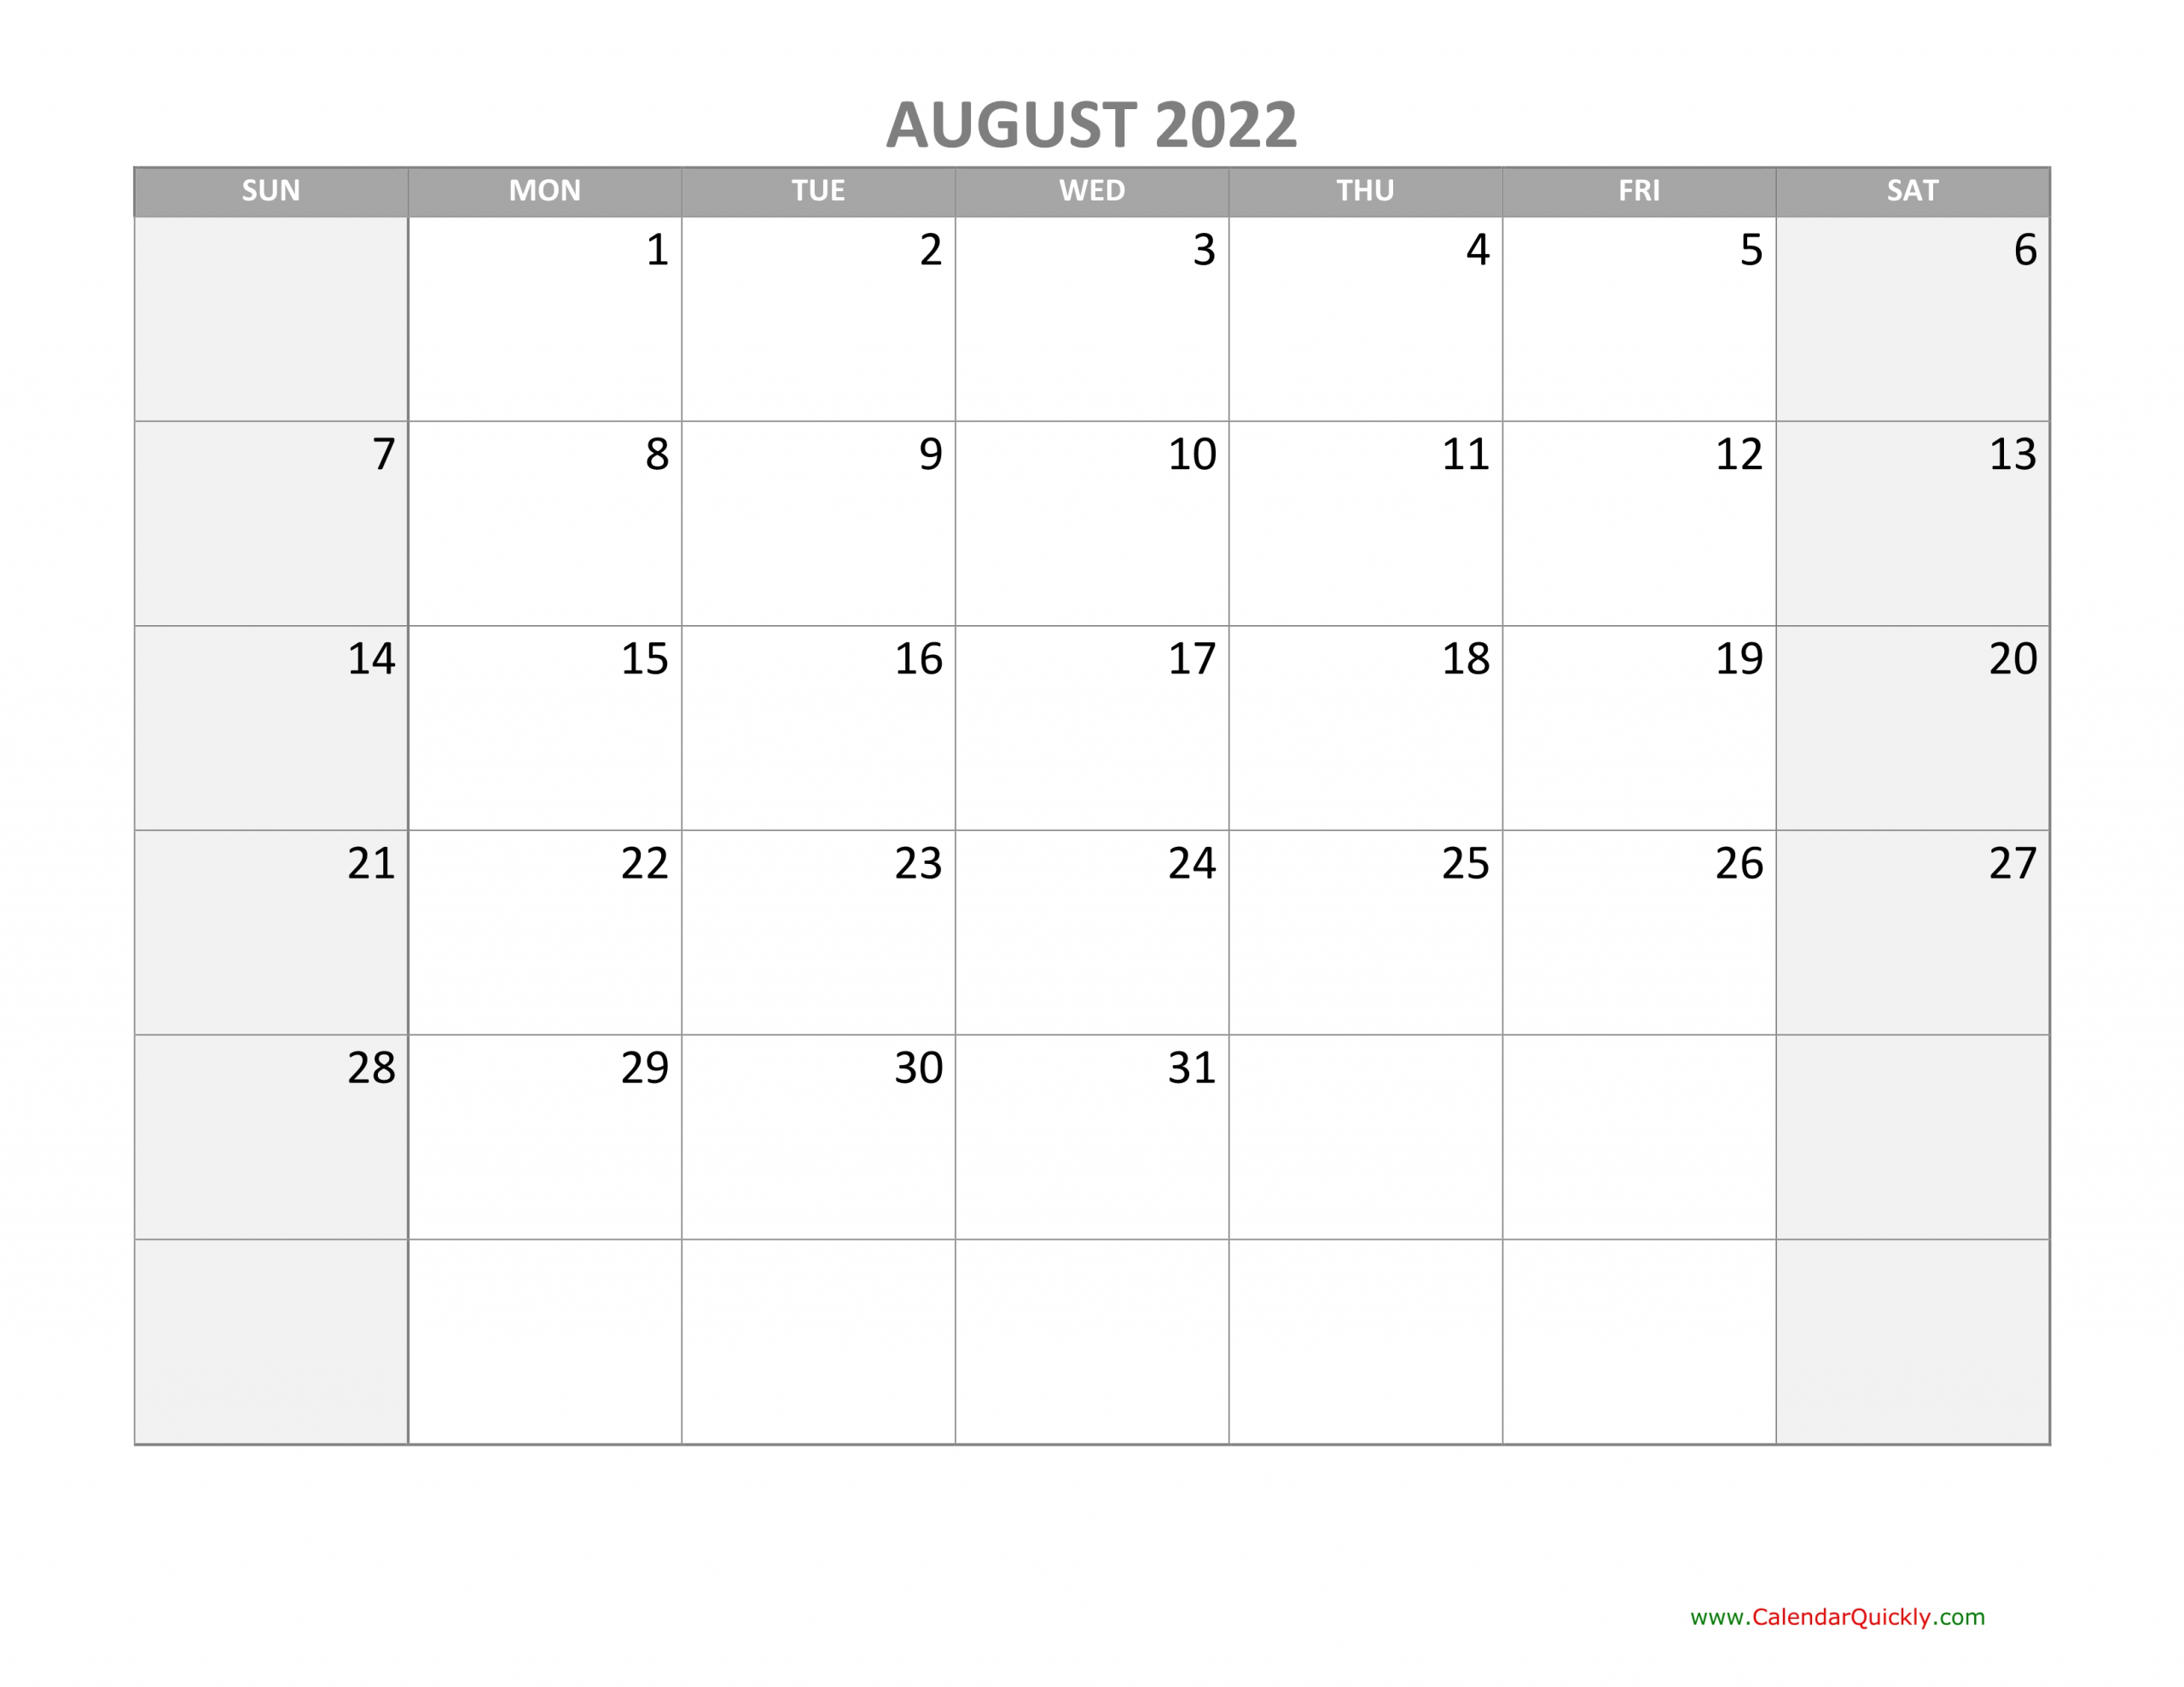 August Calendar 2022 With Holidays | Calendar Quickly